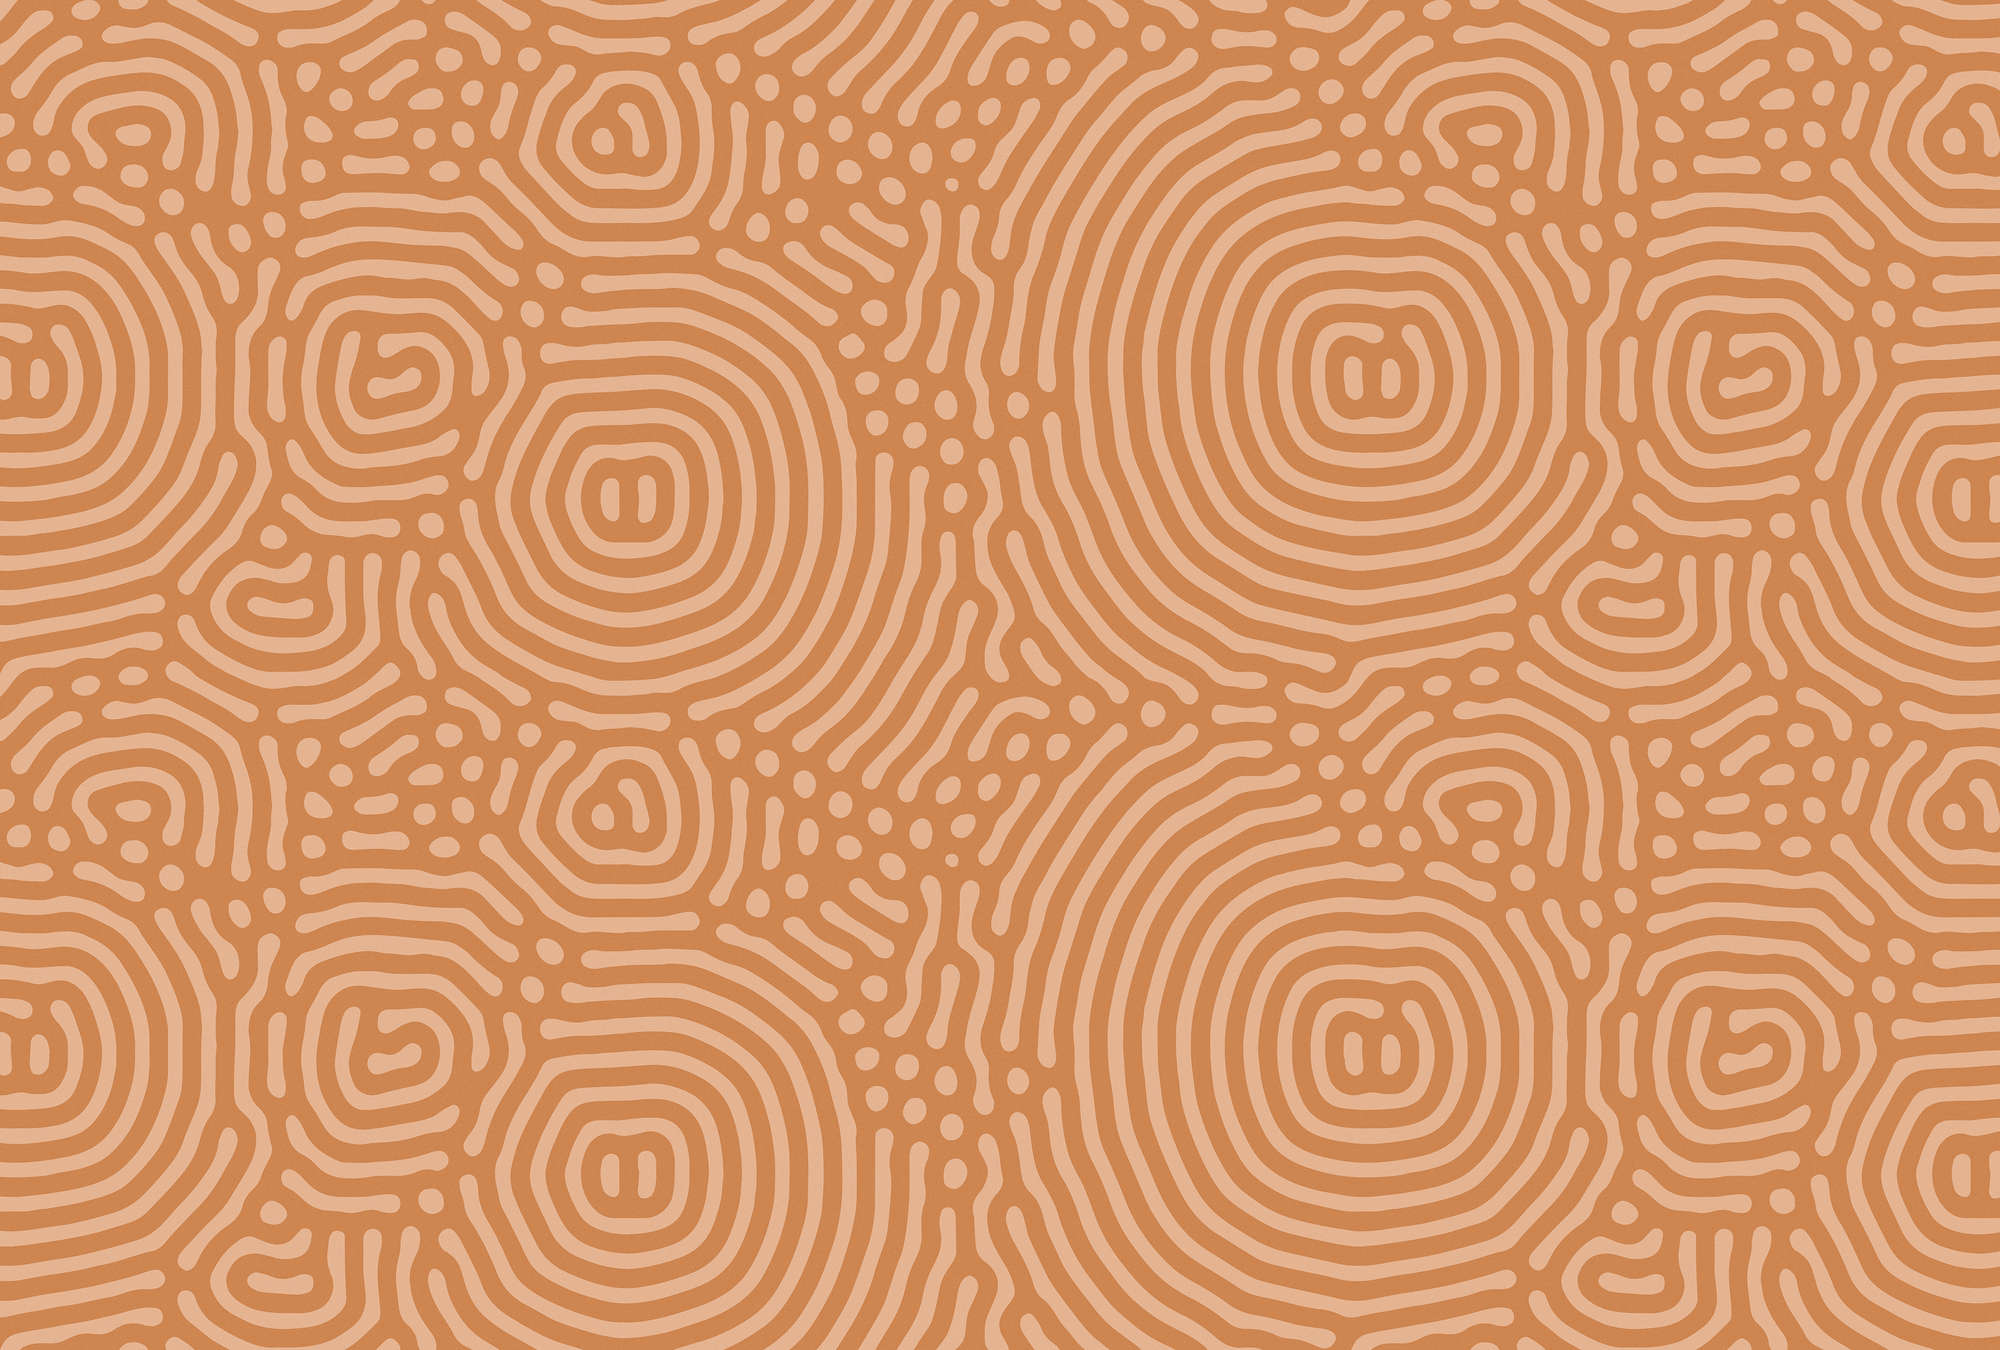             Sahel 2 - Papel pintado fotográfico naranja patrón de laberinto terracota
        